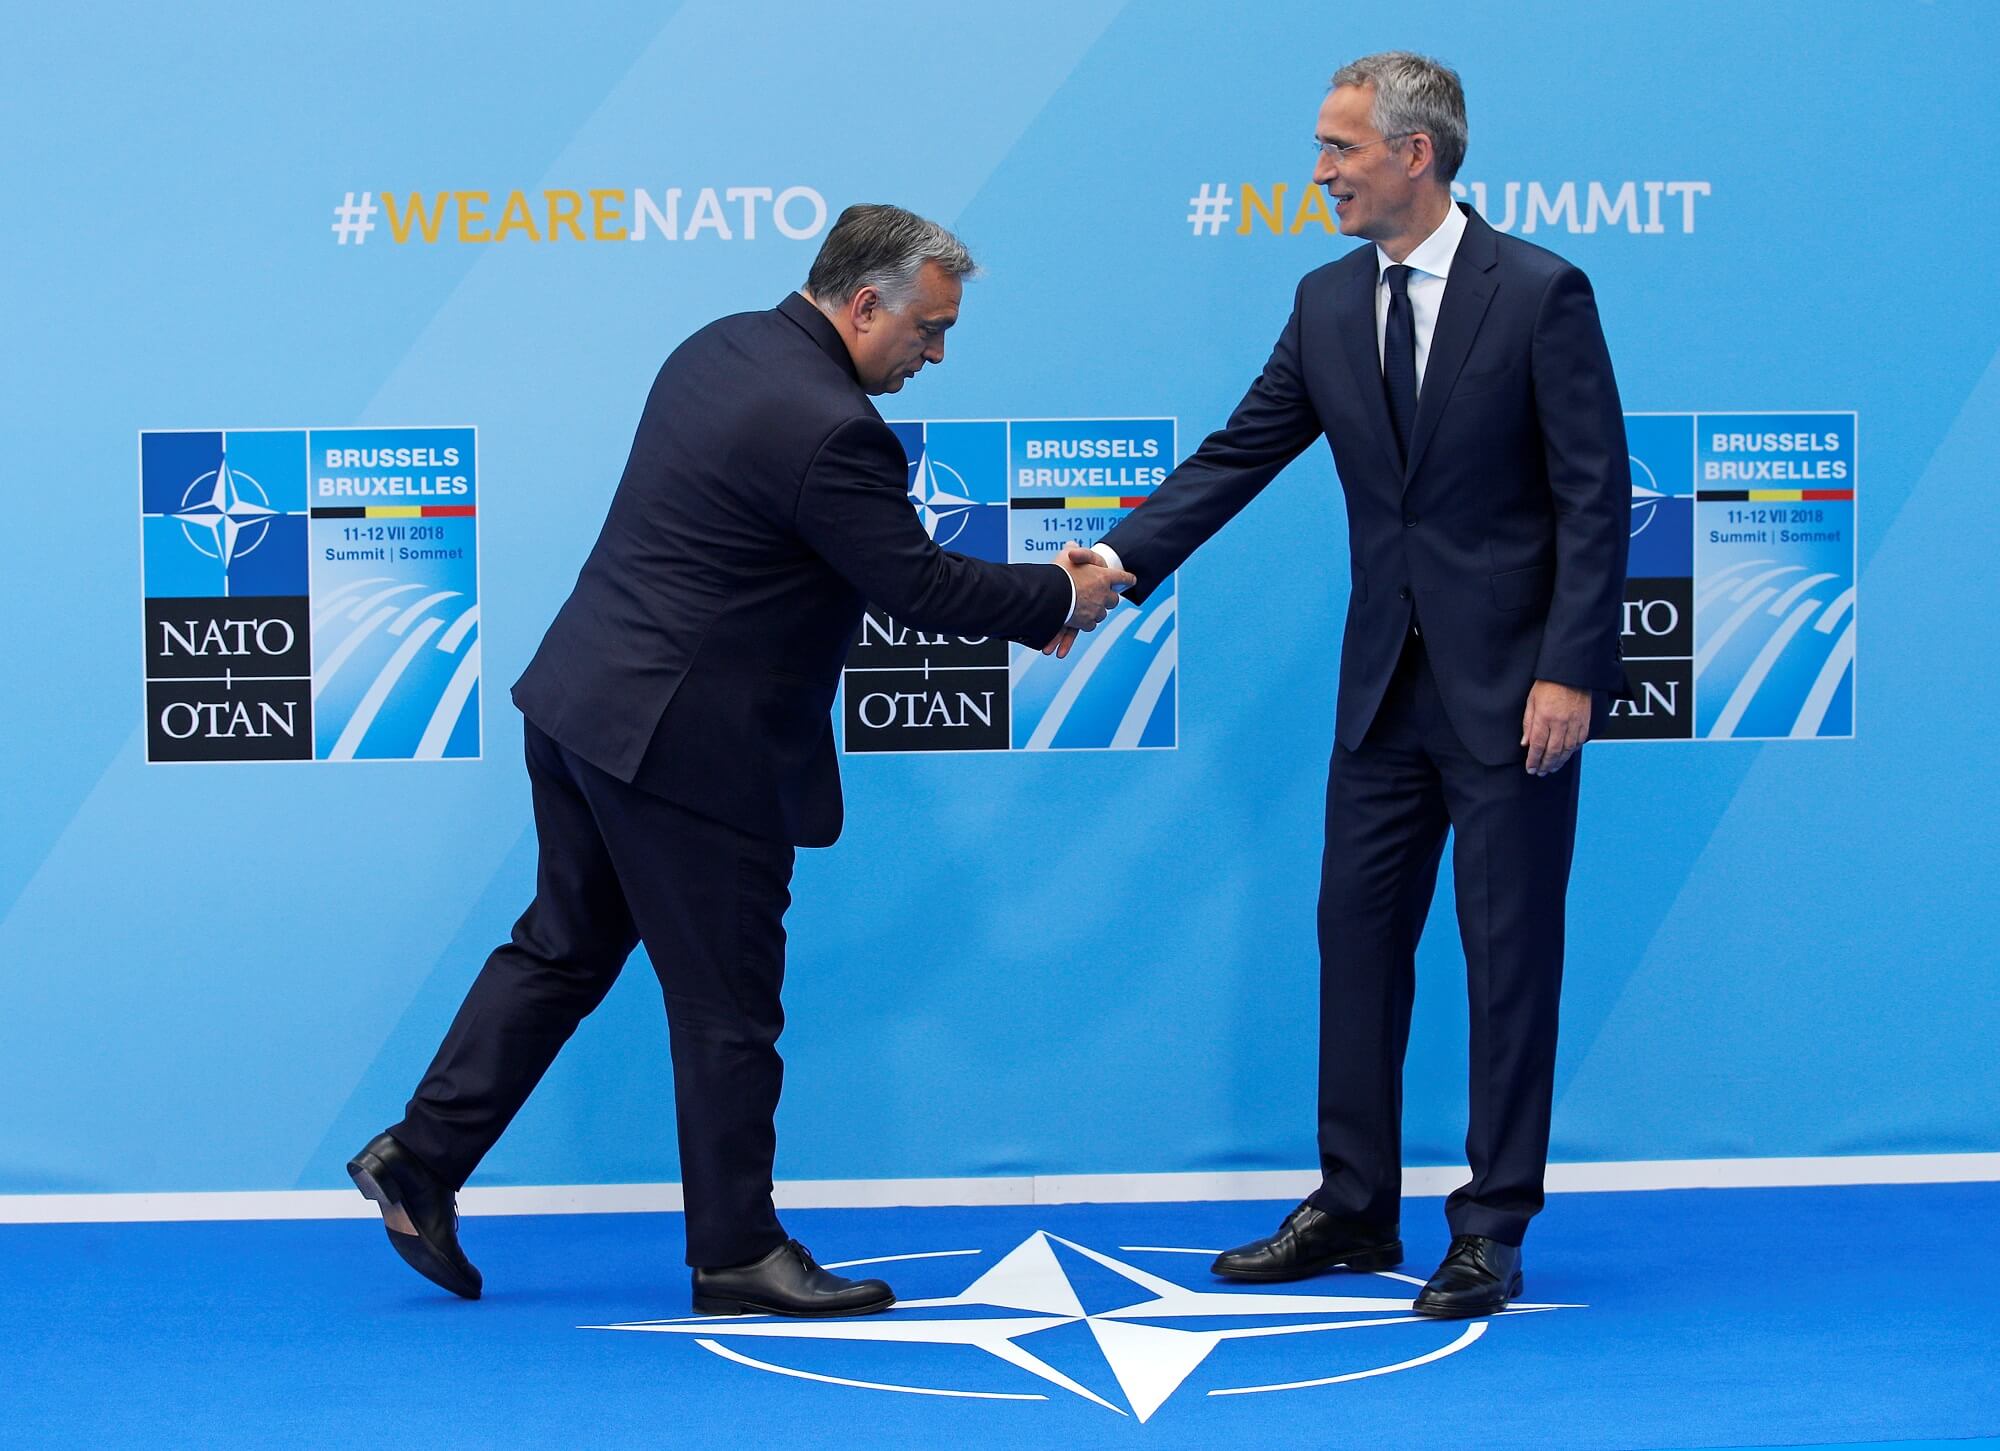 Kolen - Hungarian Prime Minister Viktor Orban is greeted by NATO Secretary General Jens Stoltenberg at NATO headquarters in Brussels, Belgium, July 11, 2018.